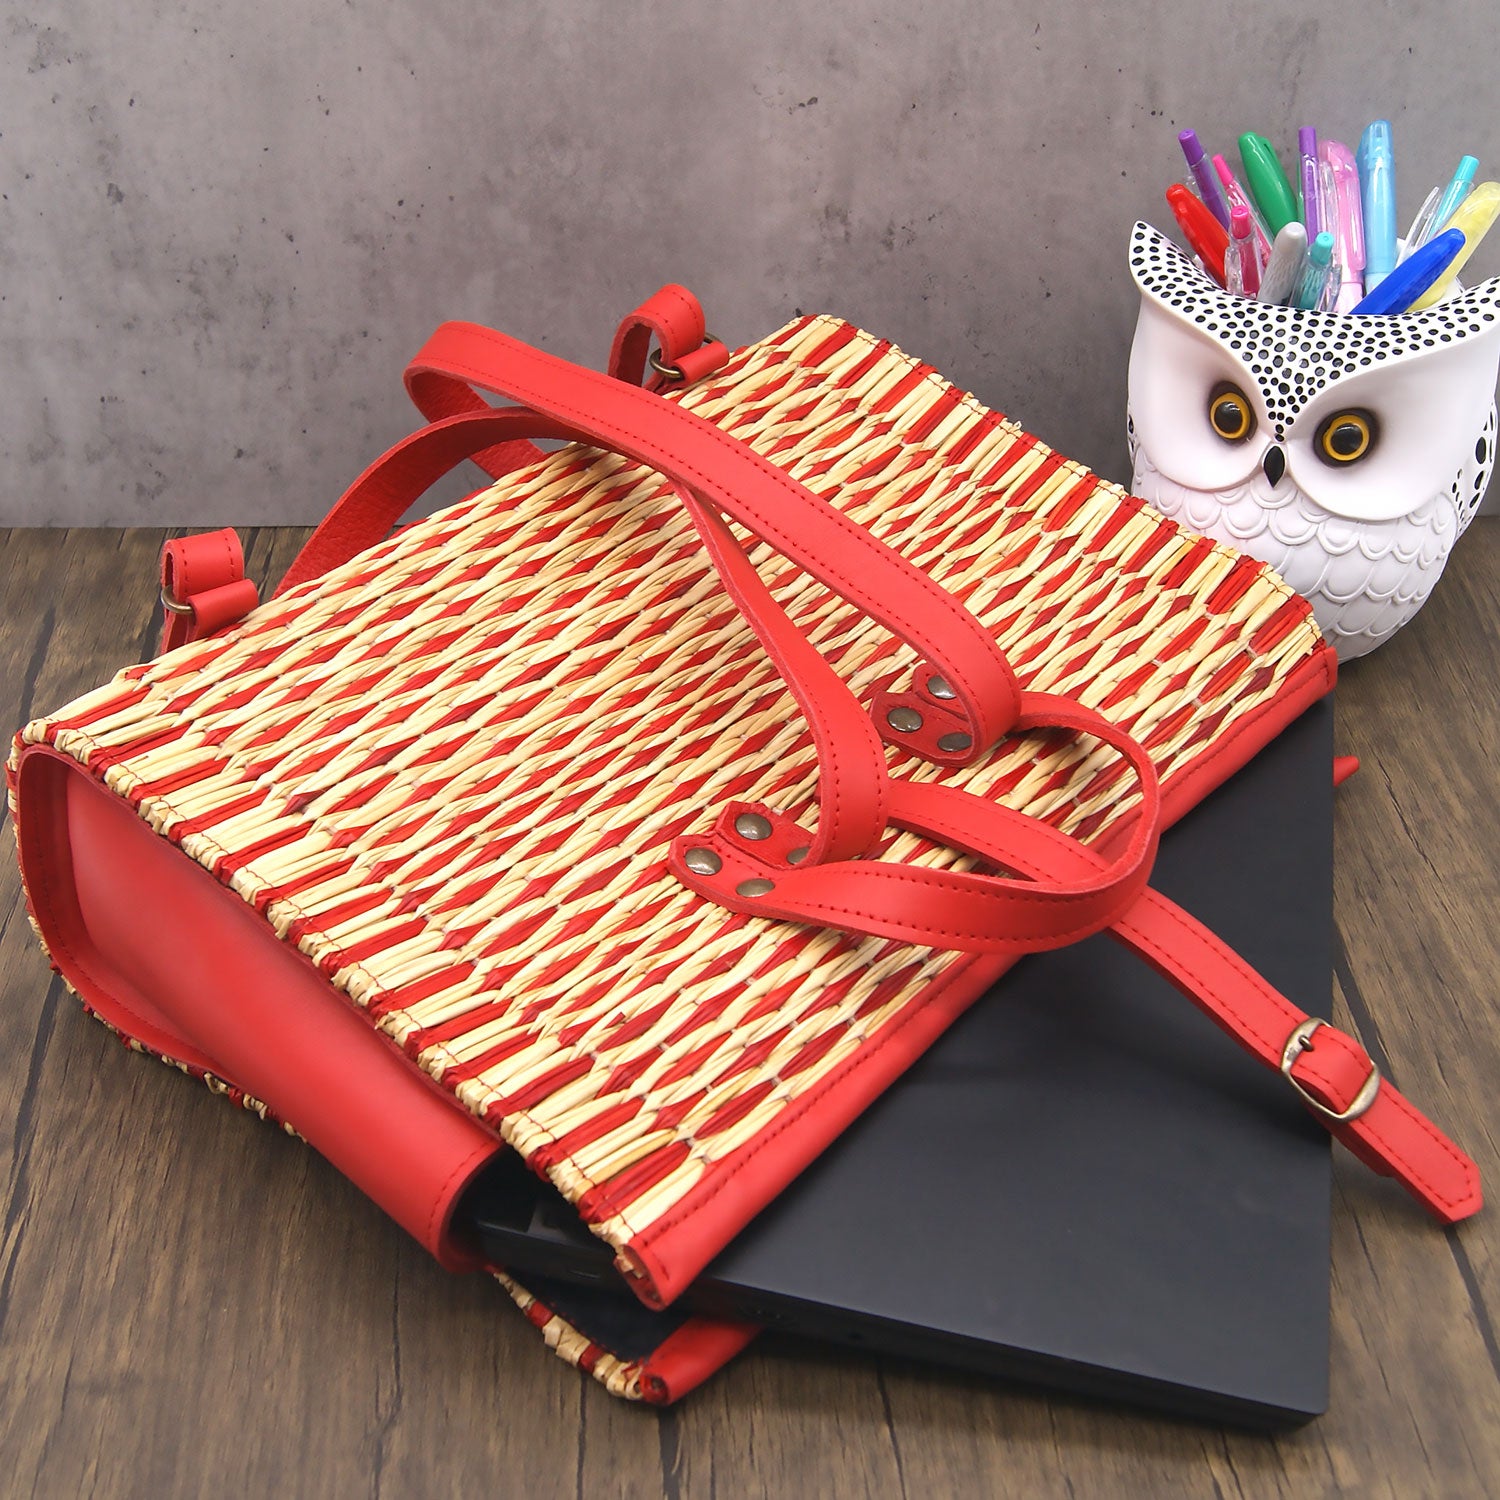 Handmade Wicker Straw Basket Laptop Backpack for Women Made in Portugal